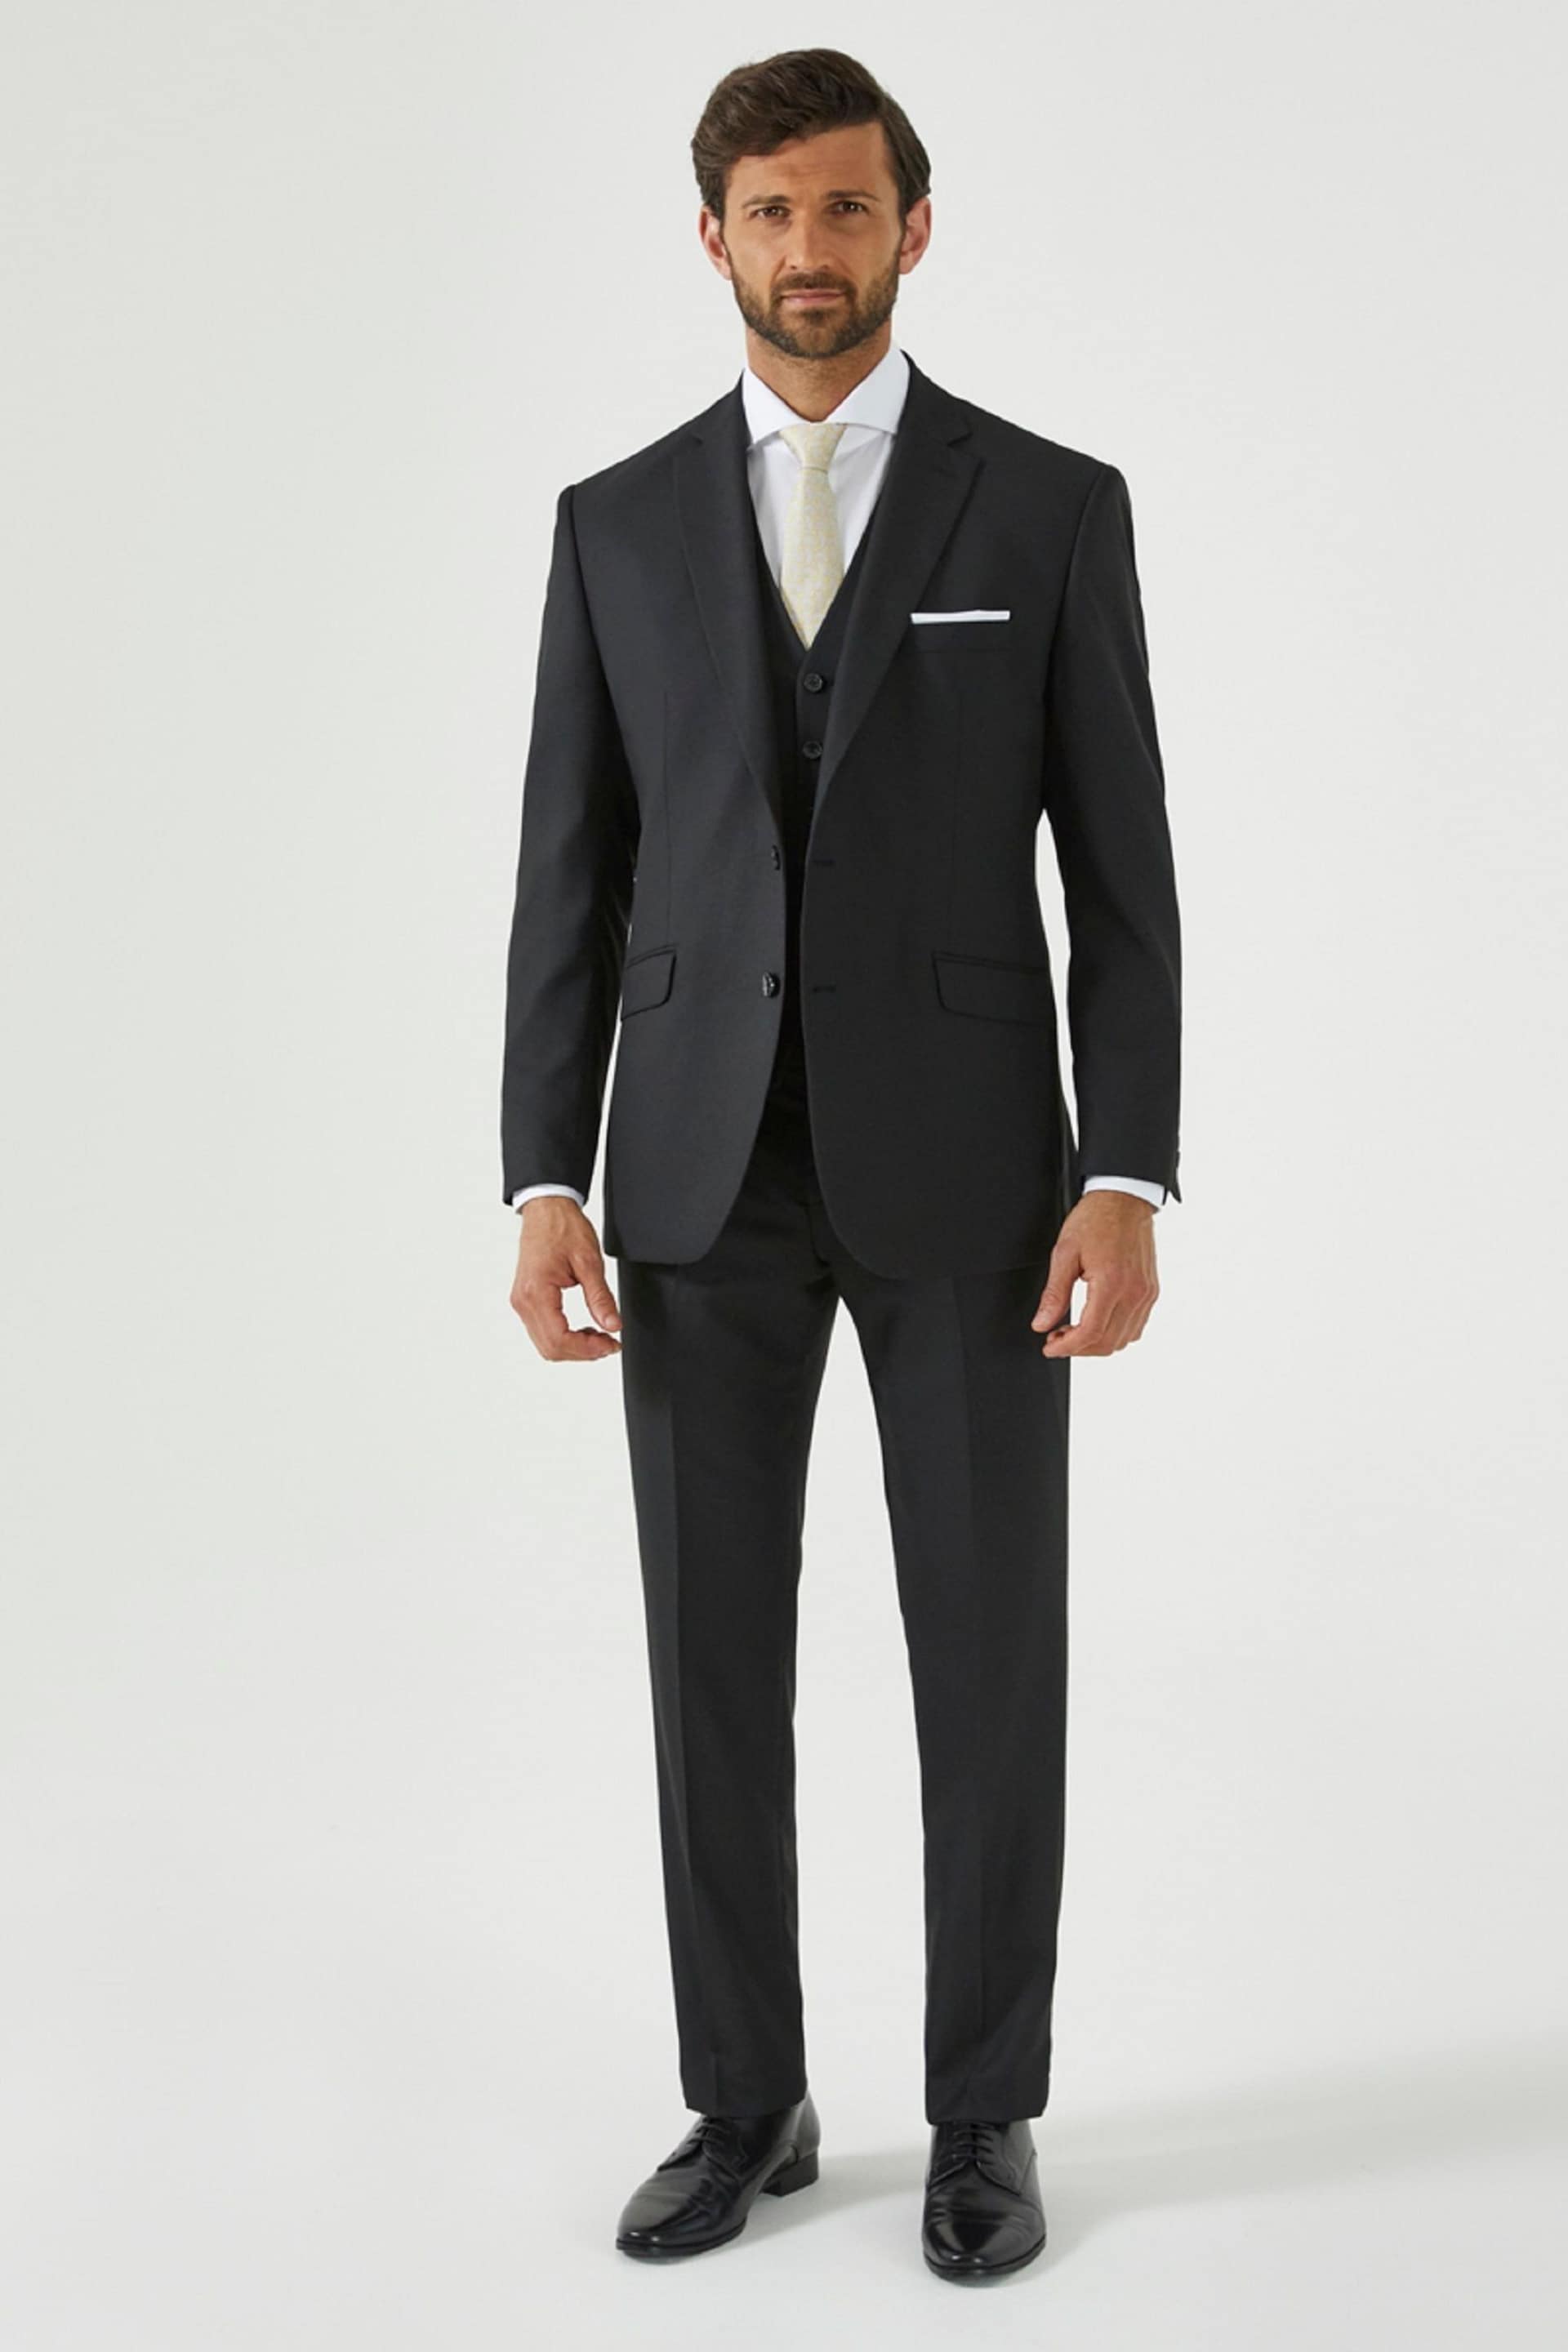 Skopes Montague Black Tailored Fit Suit Jacket - Image 4 of 6